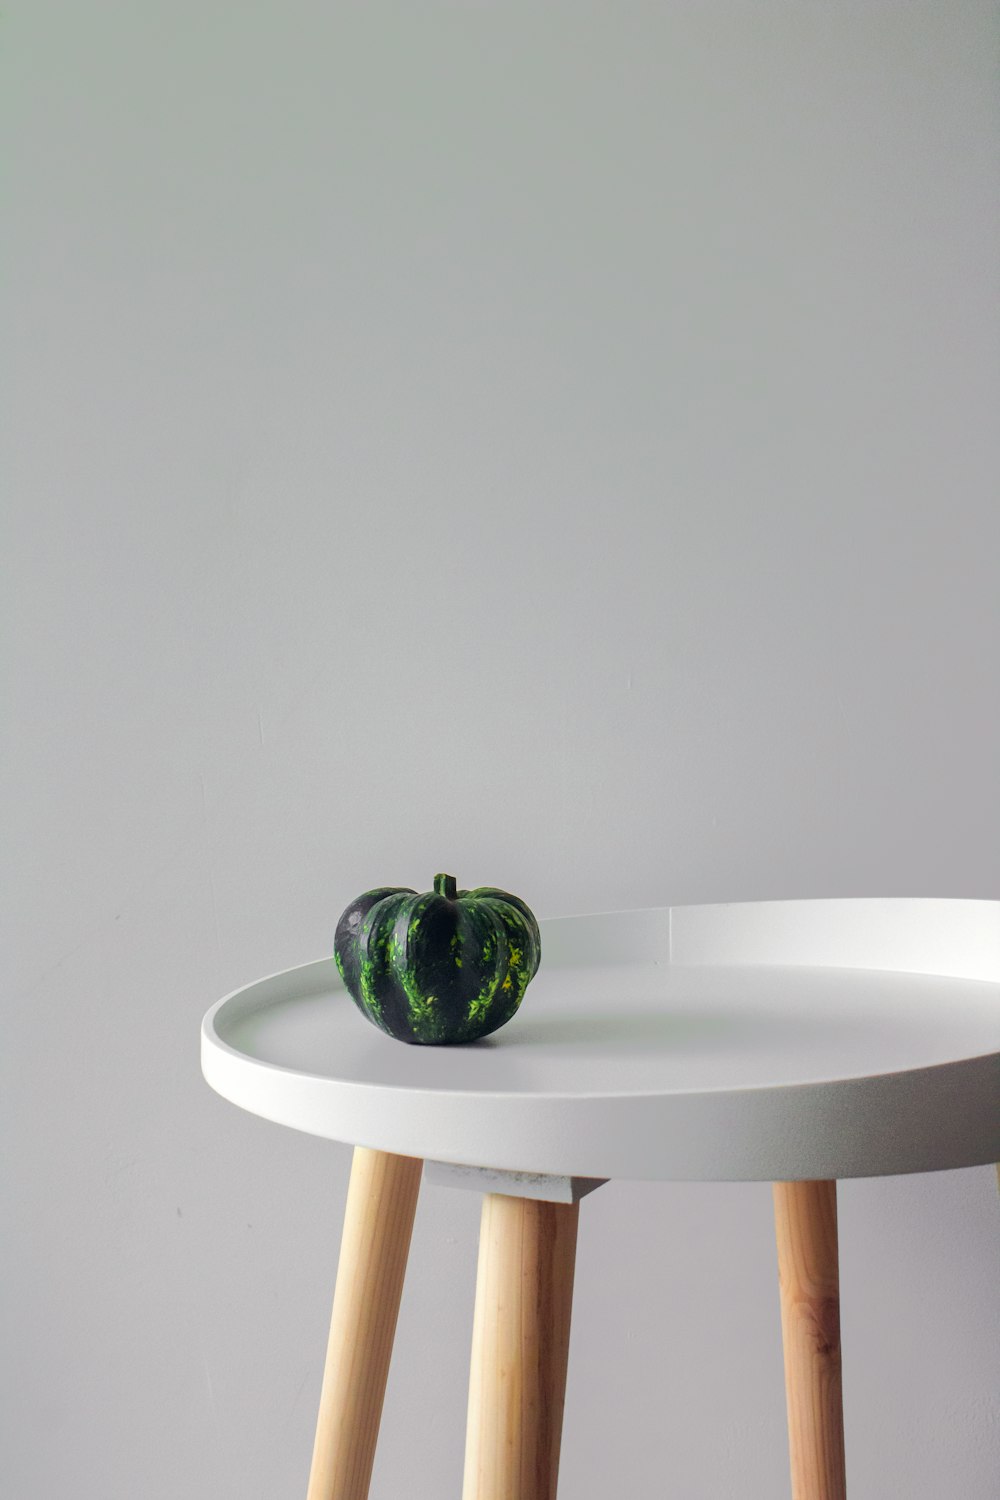 green round fruit on white table